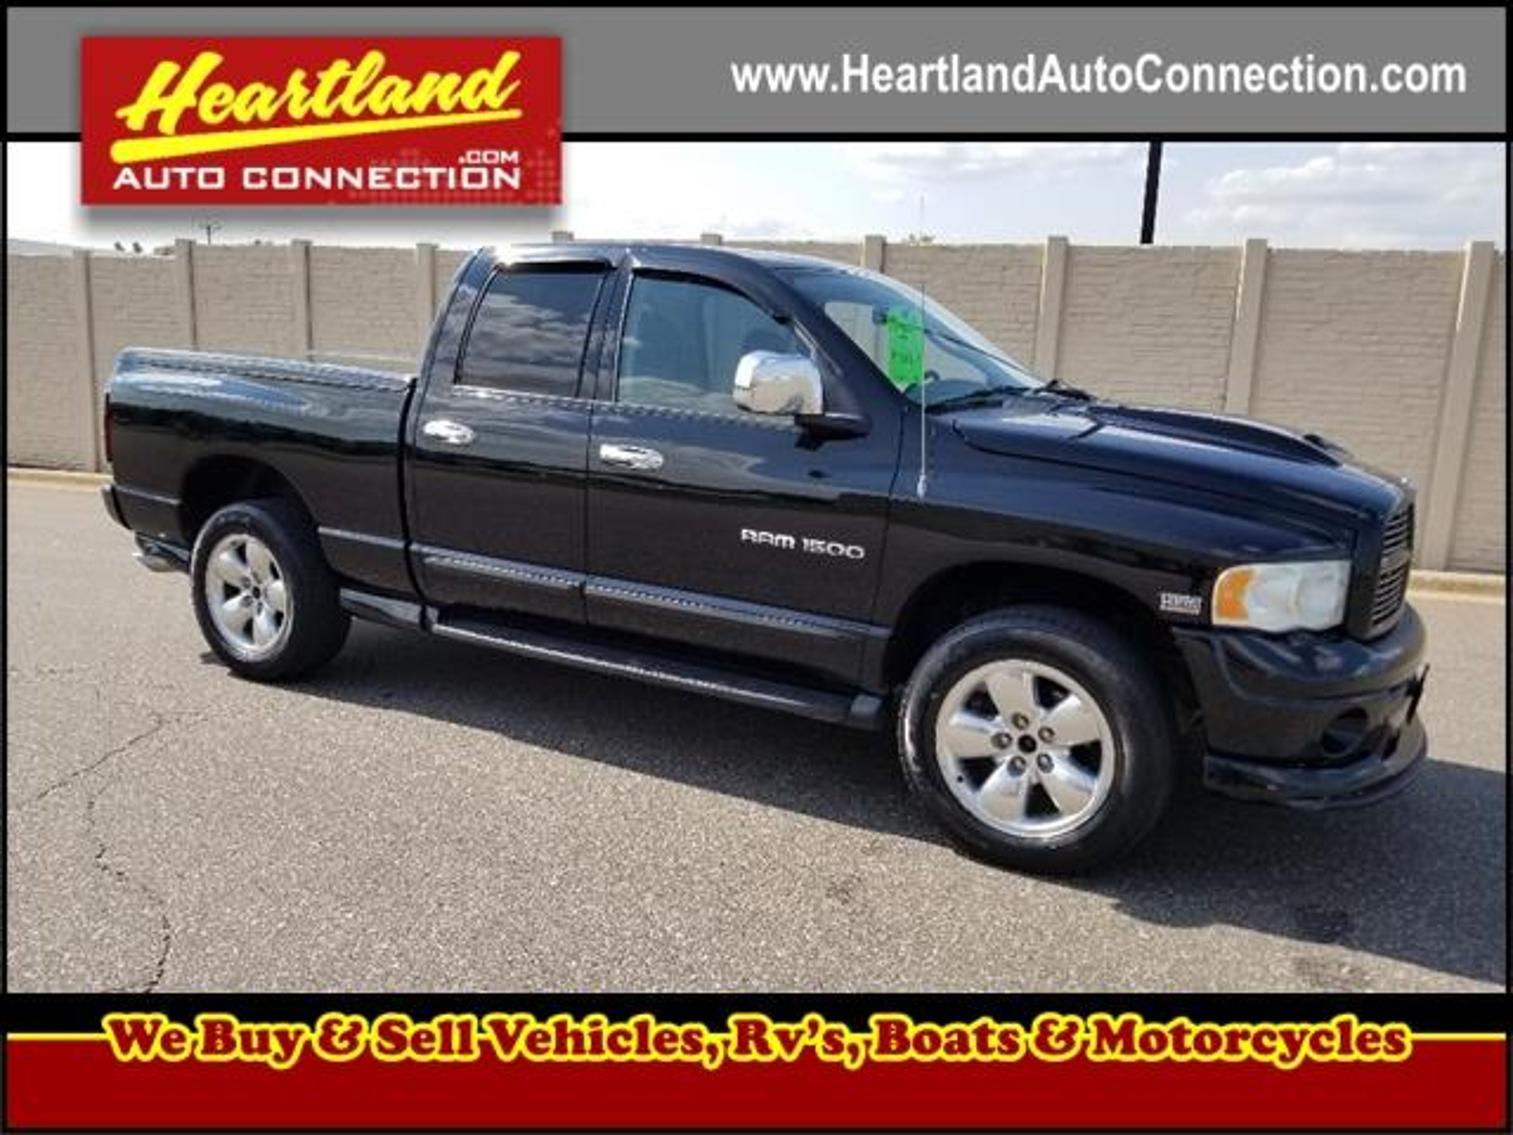 Heartland Auto Connection Fall Savings Auction